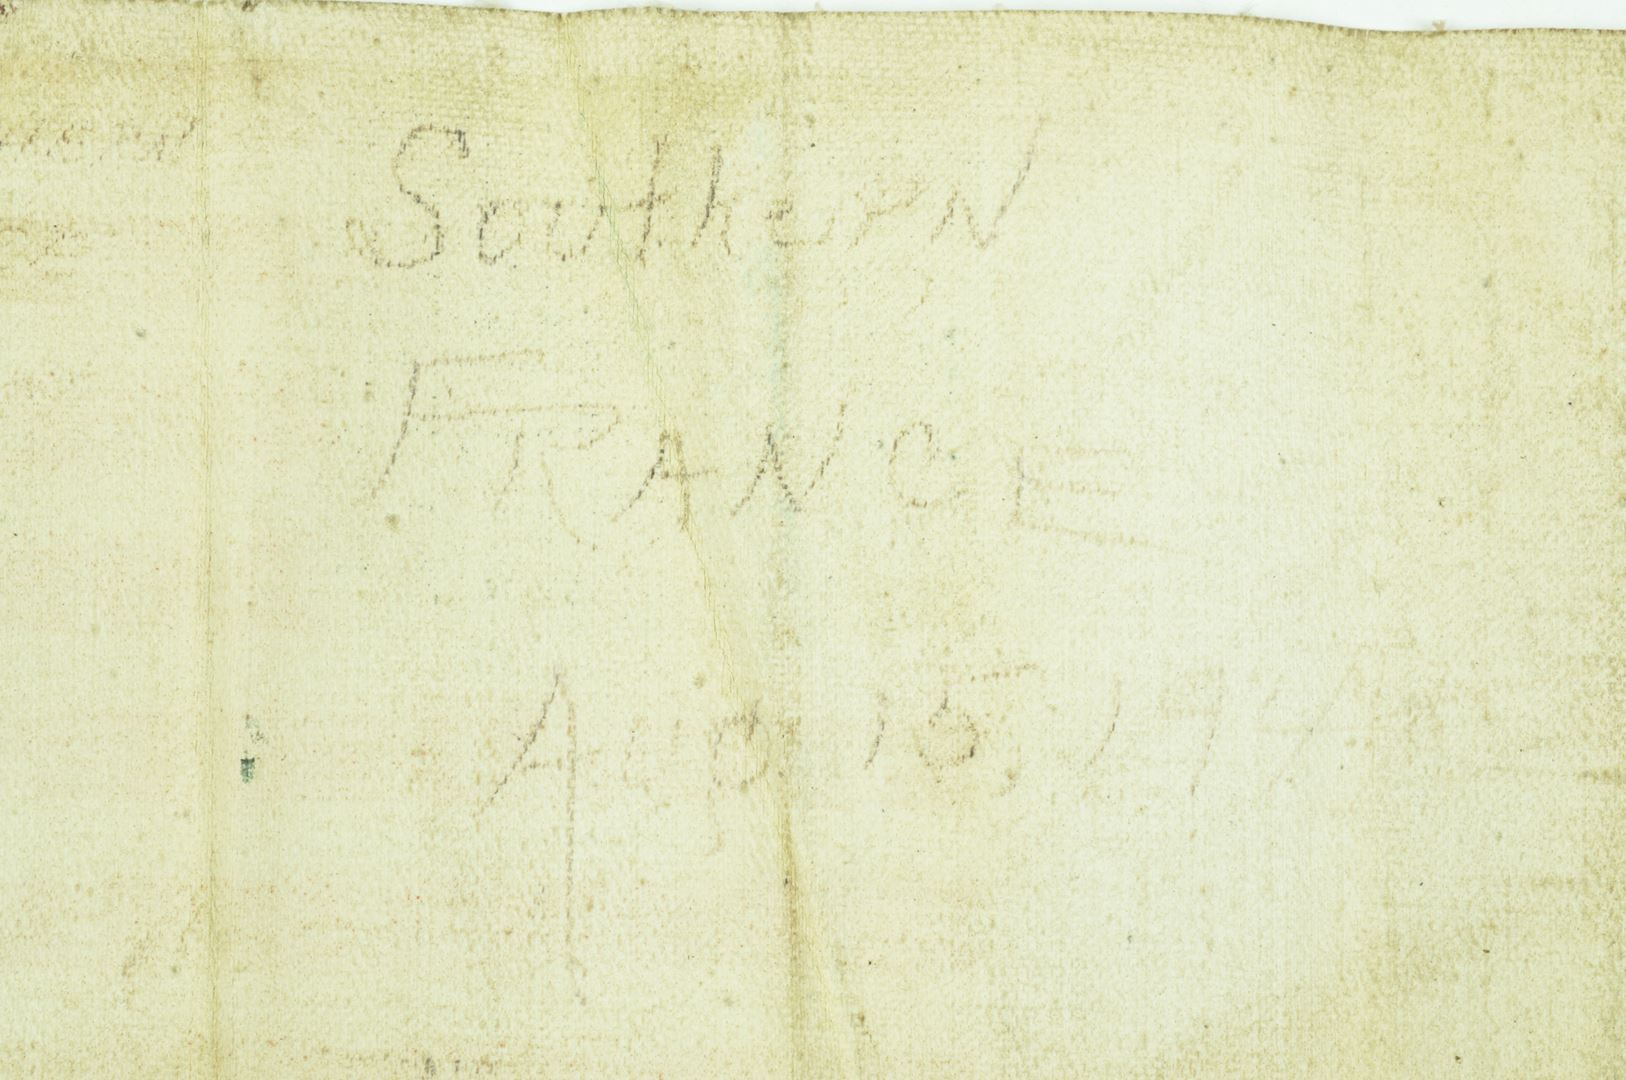 Brassard d'invasion Américain manuscrit / Provence